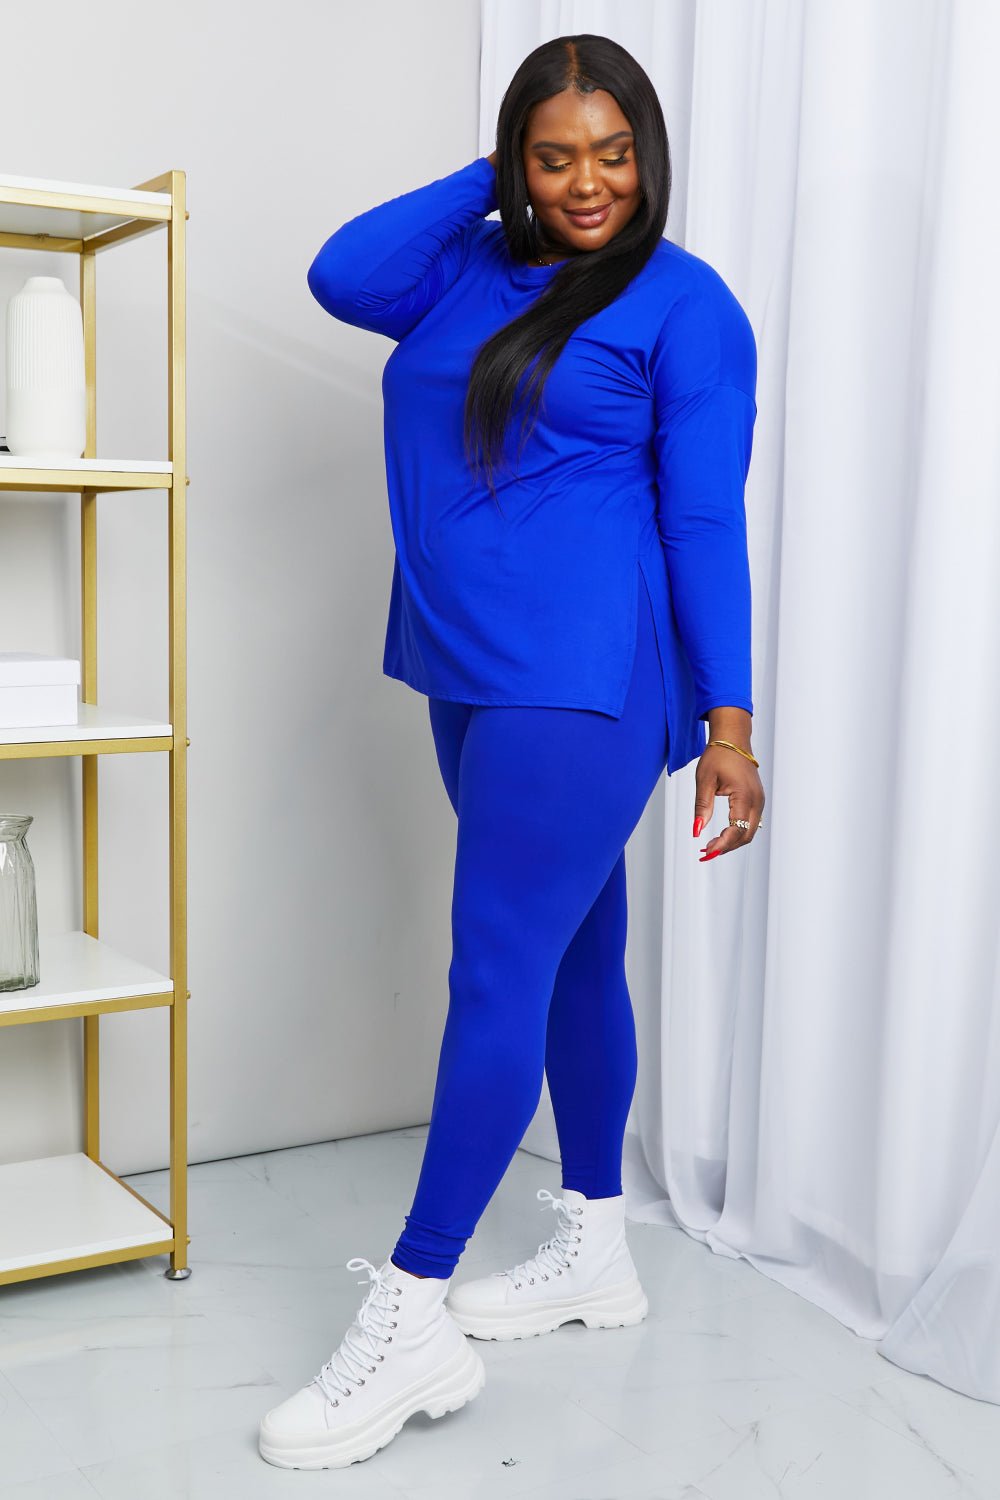 Zenana Ready to Relax Full Size Brushed Microfiber Loungewear Set in Bright Blue - Shah S. Sahota